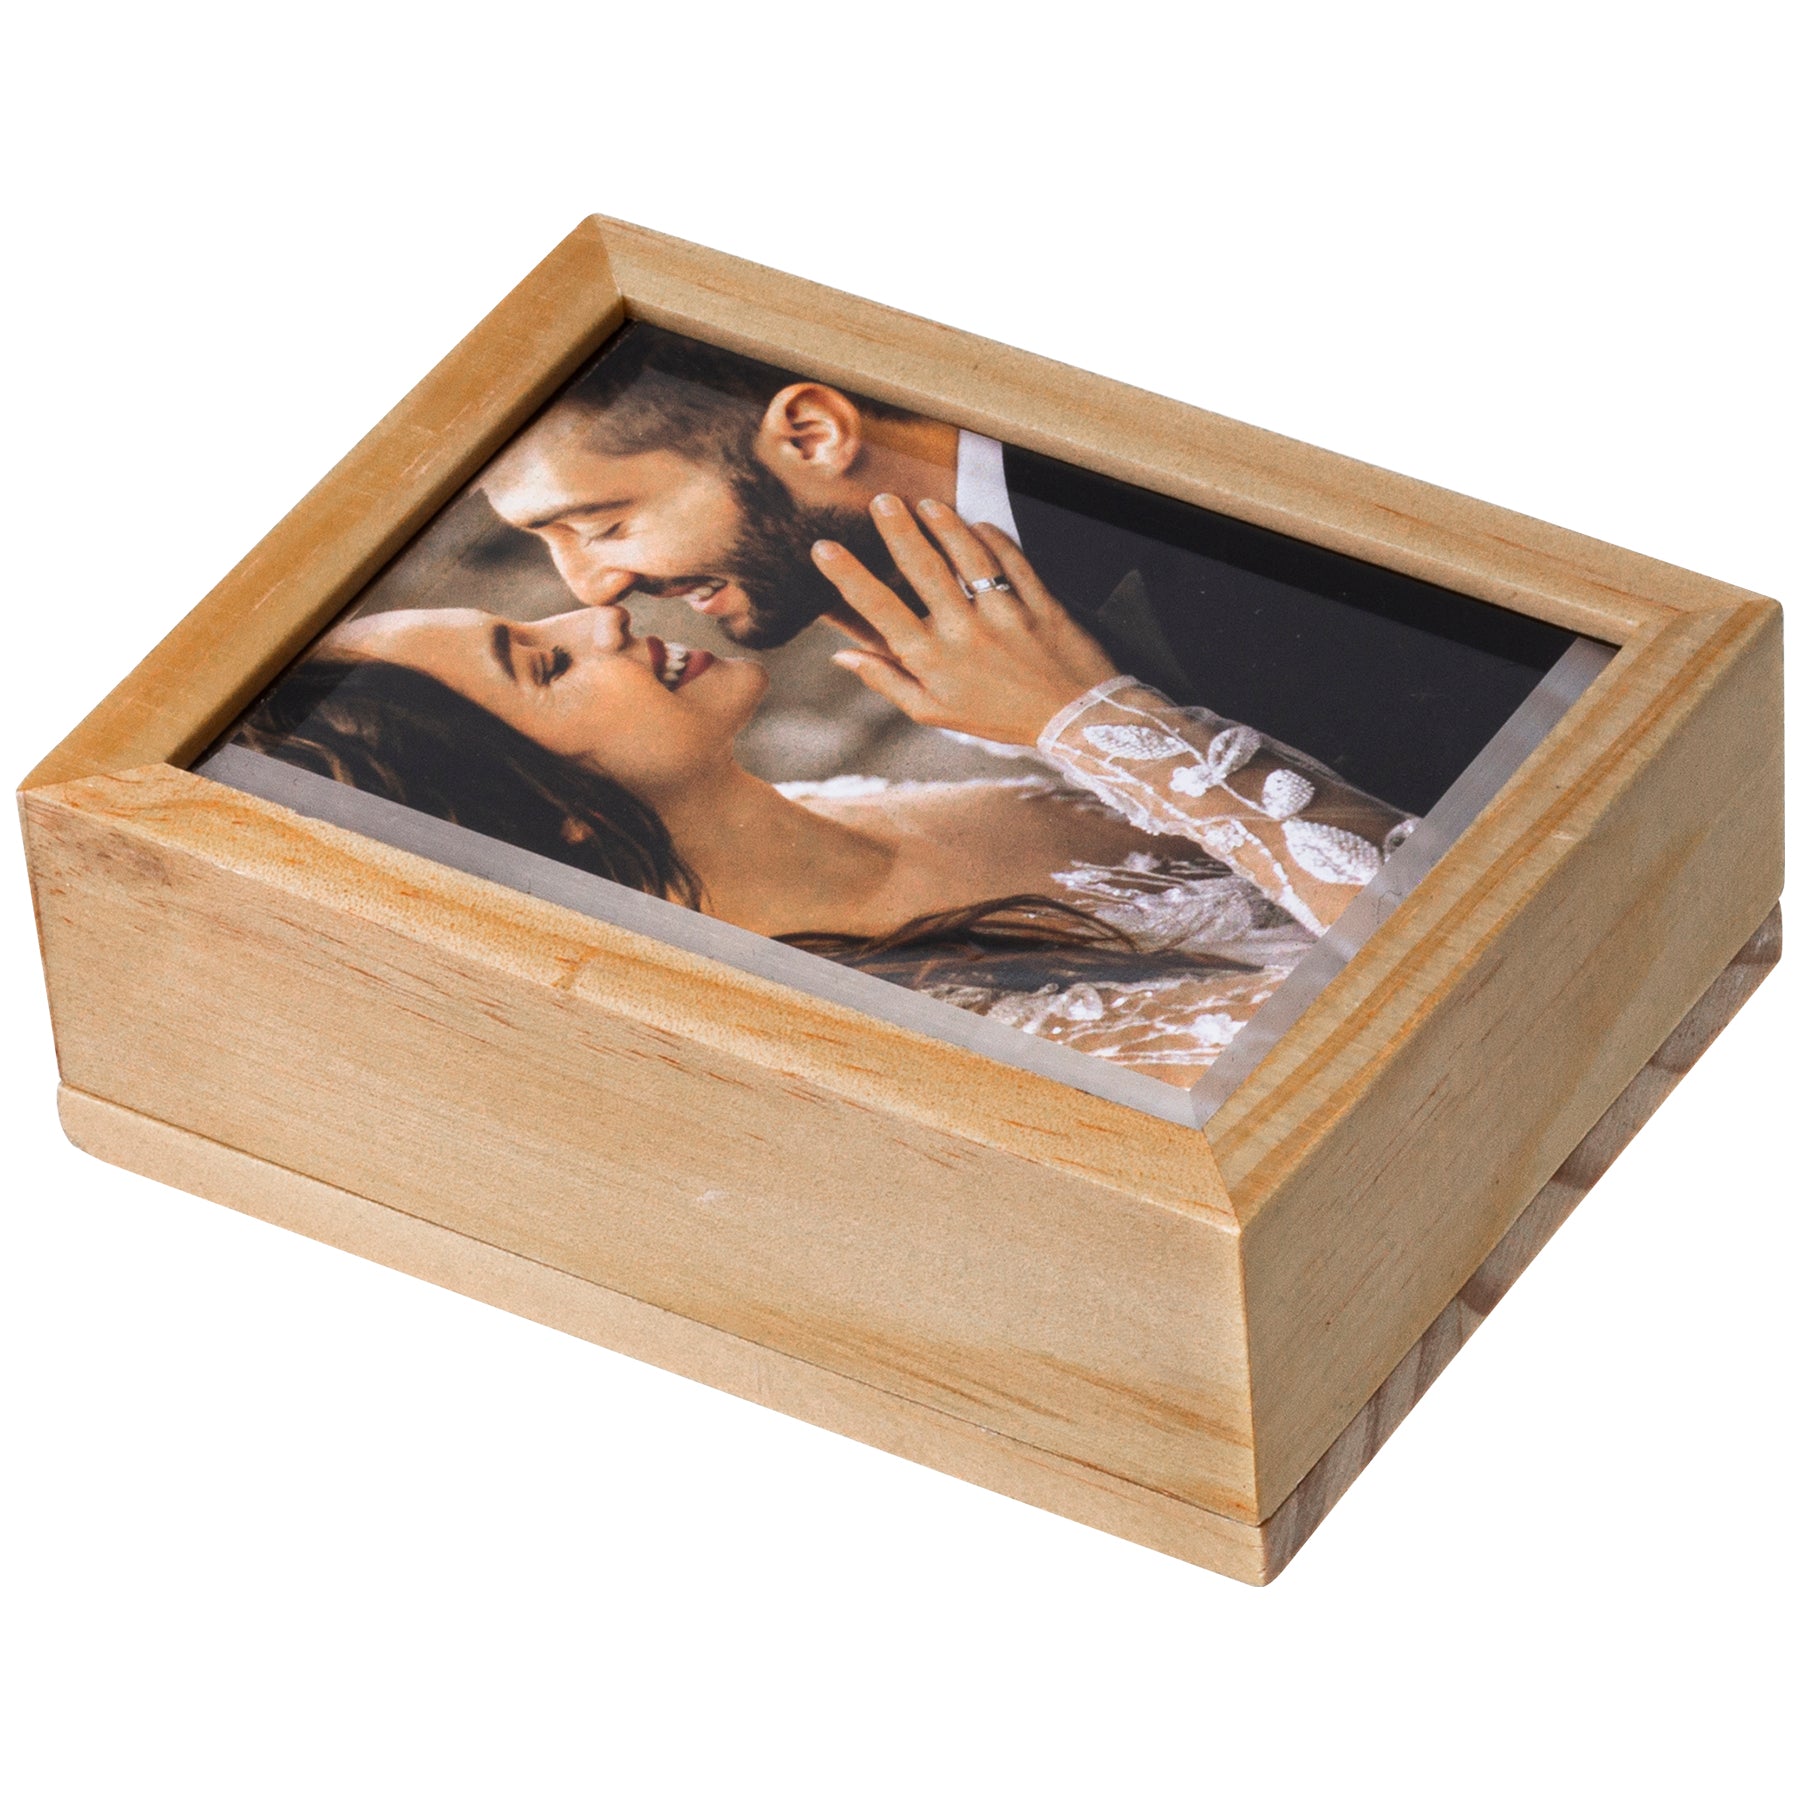 Wood Elite Flash Drive Box